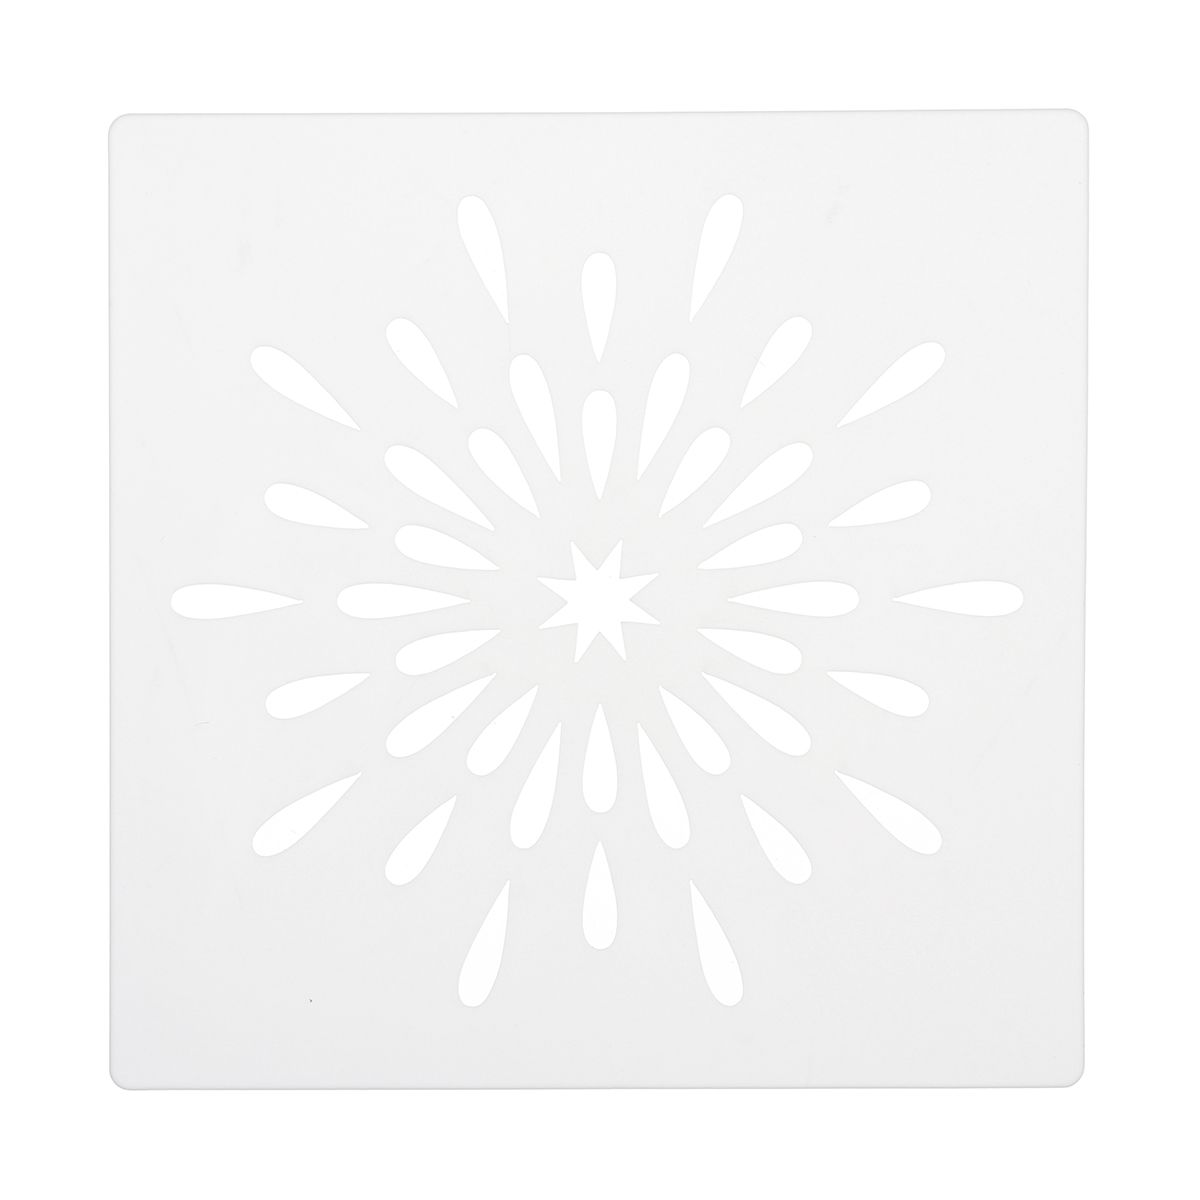 47Pcs-White-Plastic-Mandala-Paint-Tray-Openwork-Painting-Template-Tool-Kit-1707299